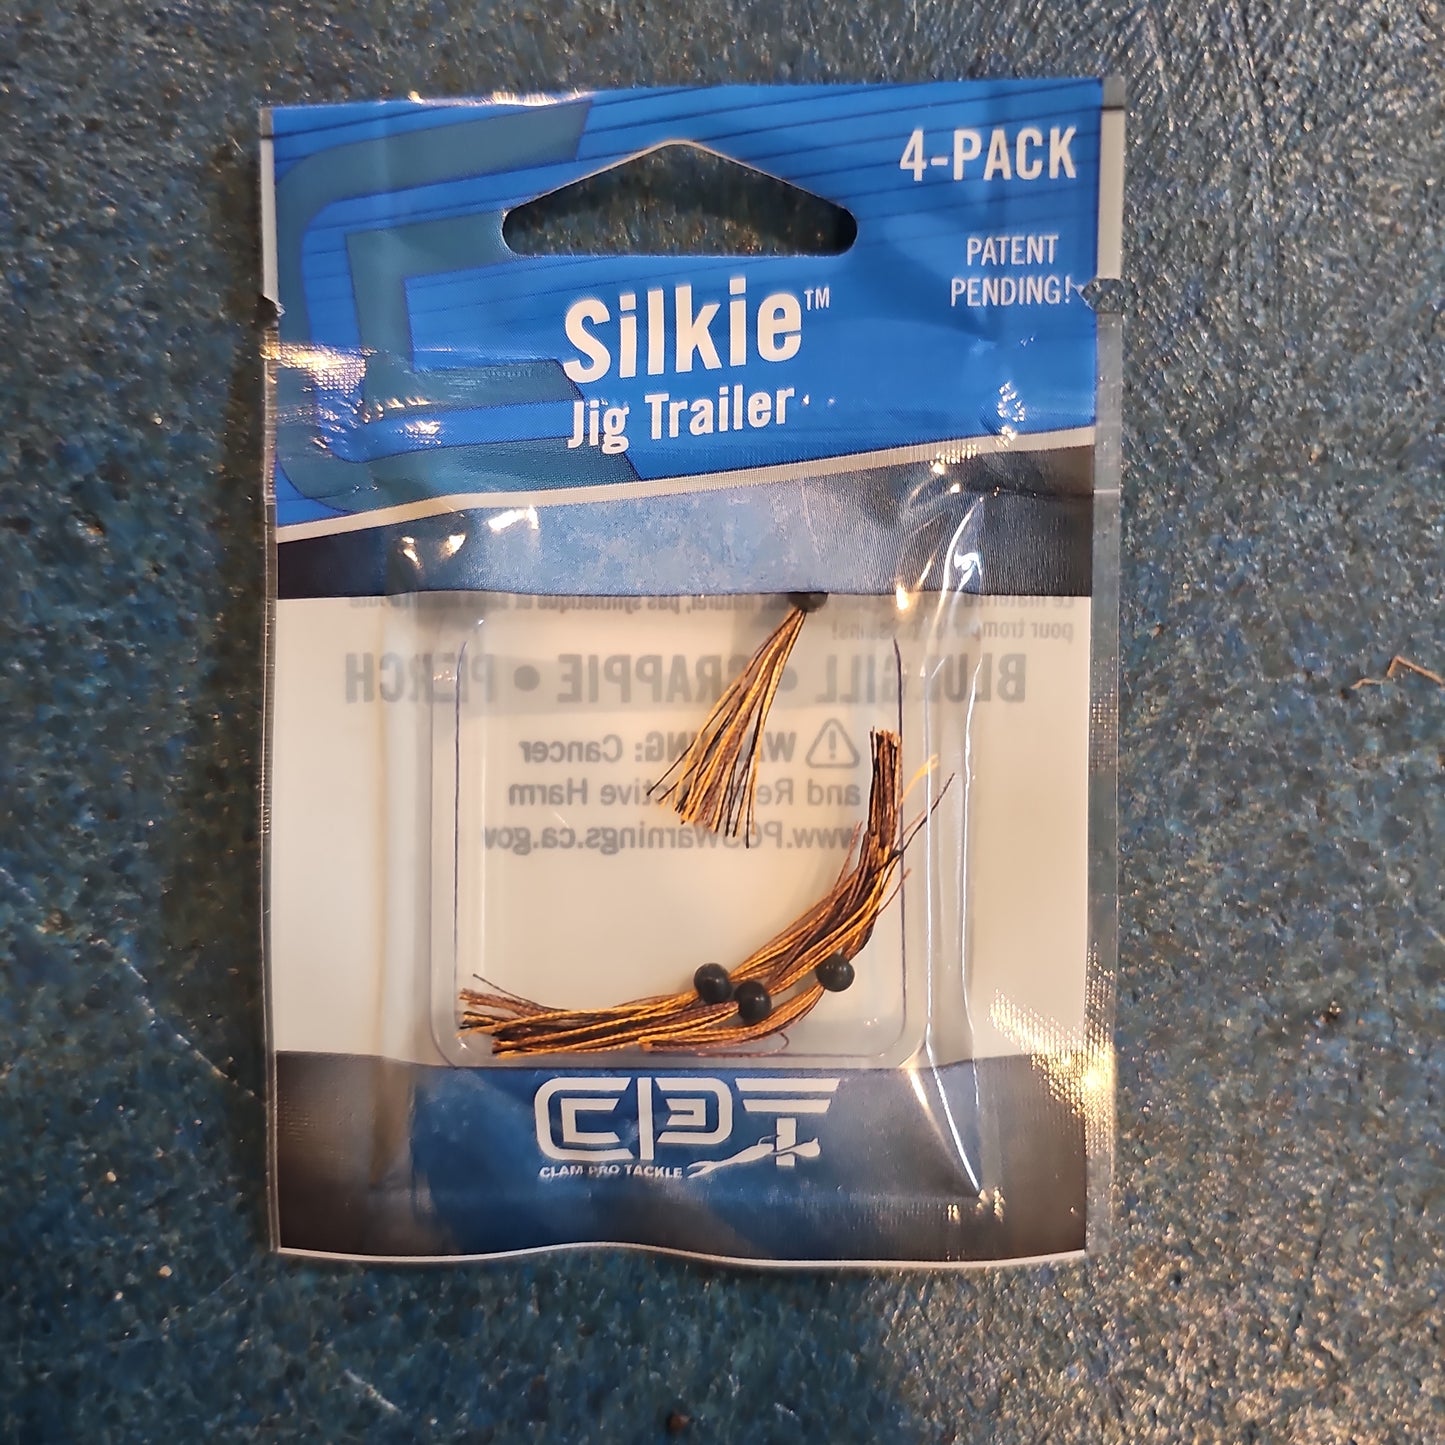 Clam Silkie Jig Trailer Crawfish